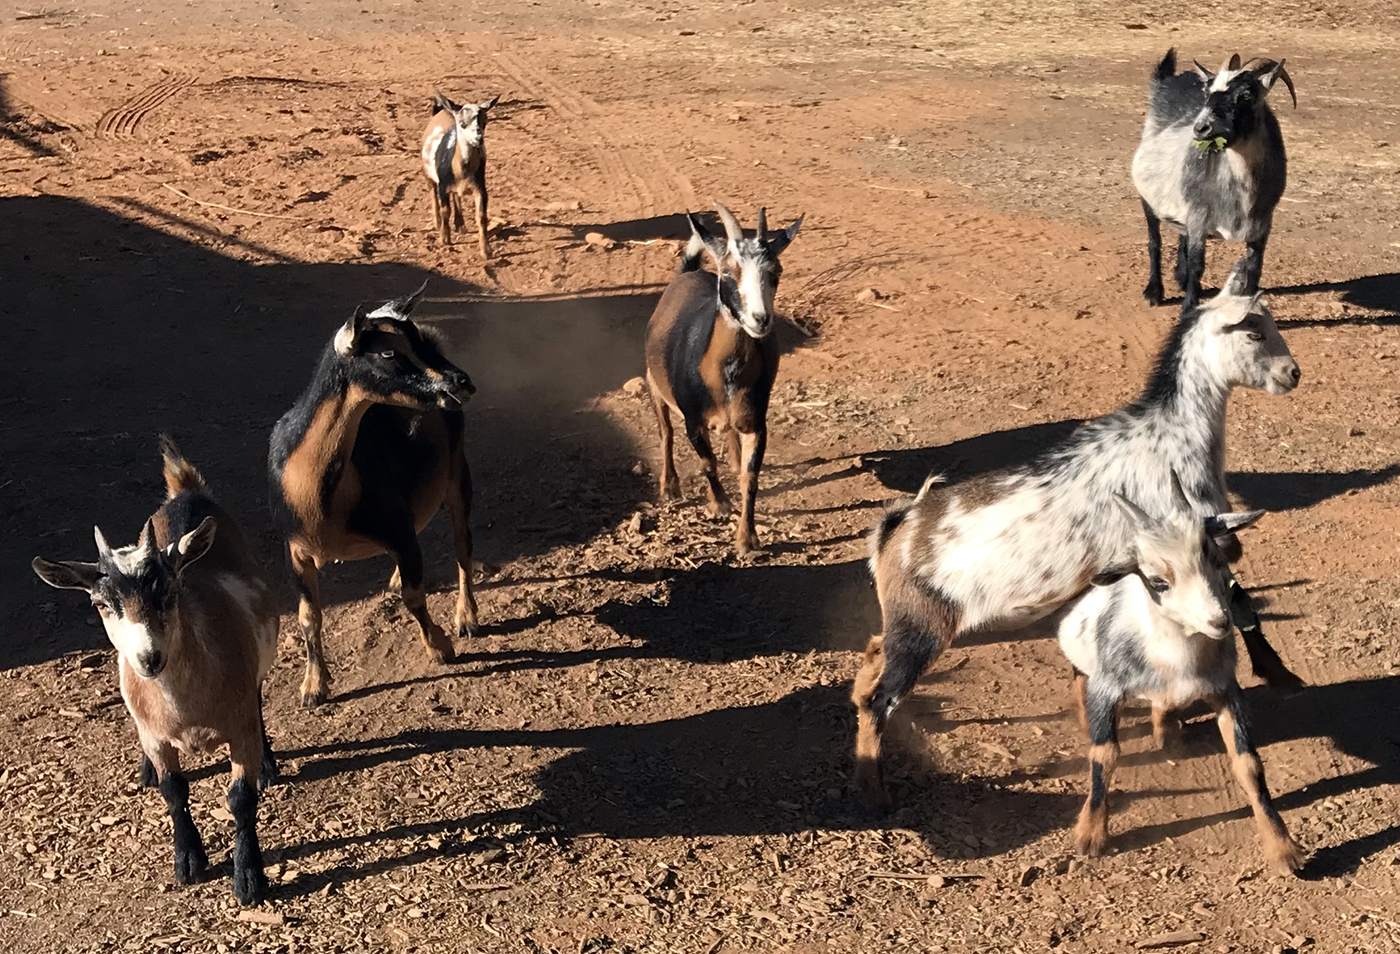 Seven goats running together